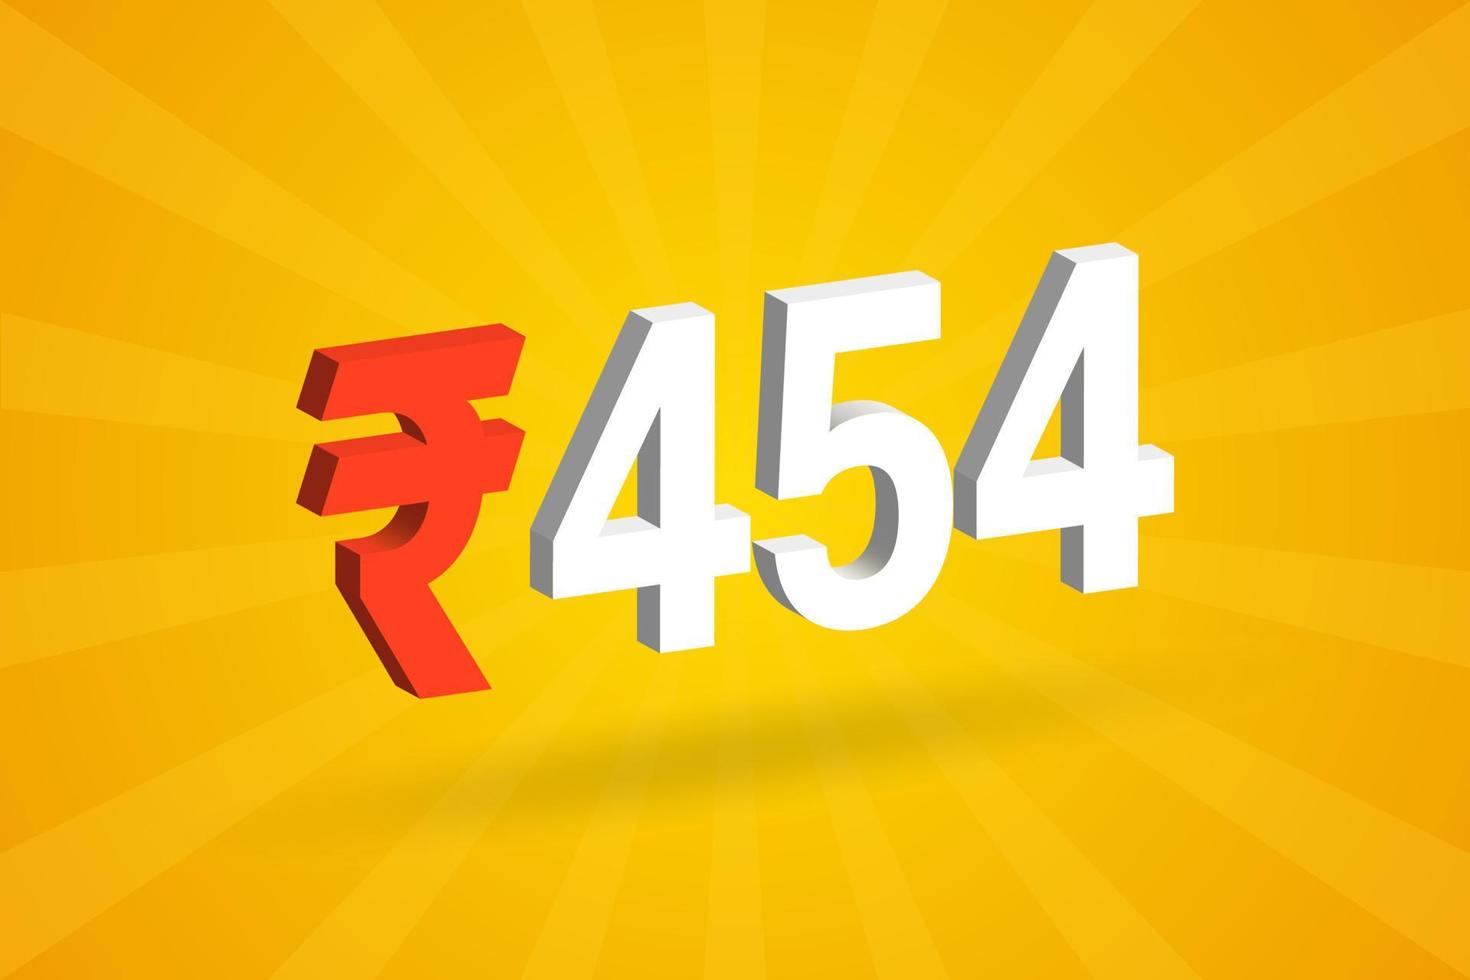 454 rupias símbolo 3d imagen vectorial de texto en negrita. 3d 454 rupia india signo de moneda ilustración vectorial vector